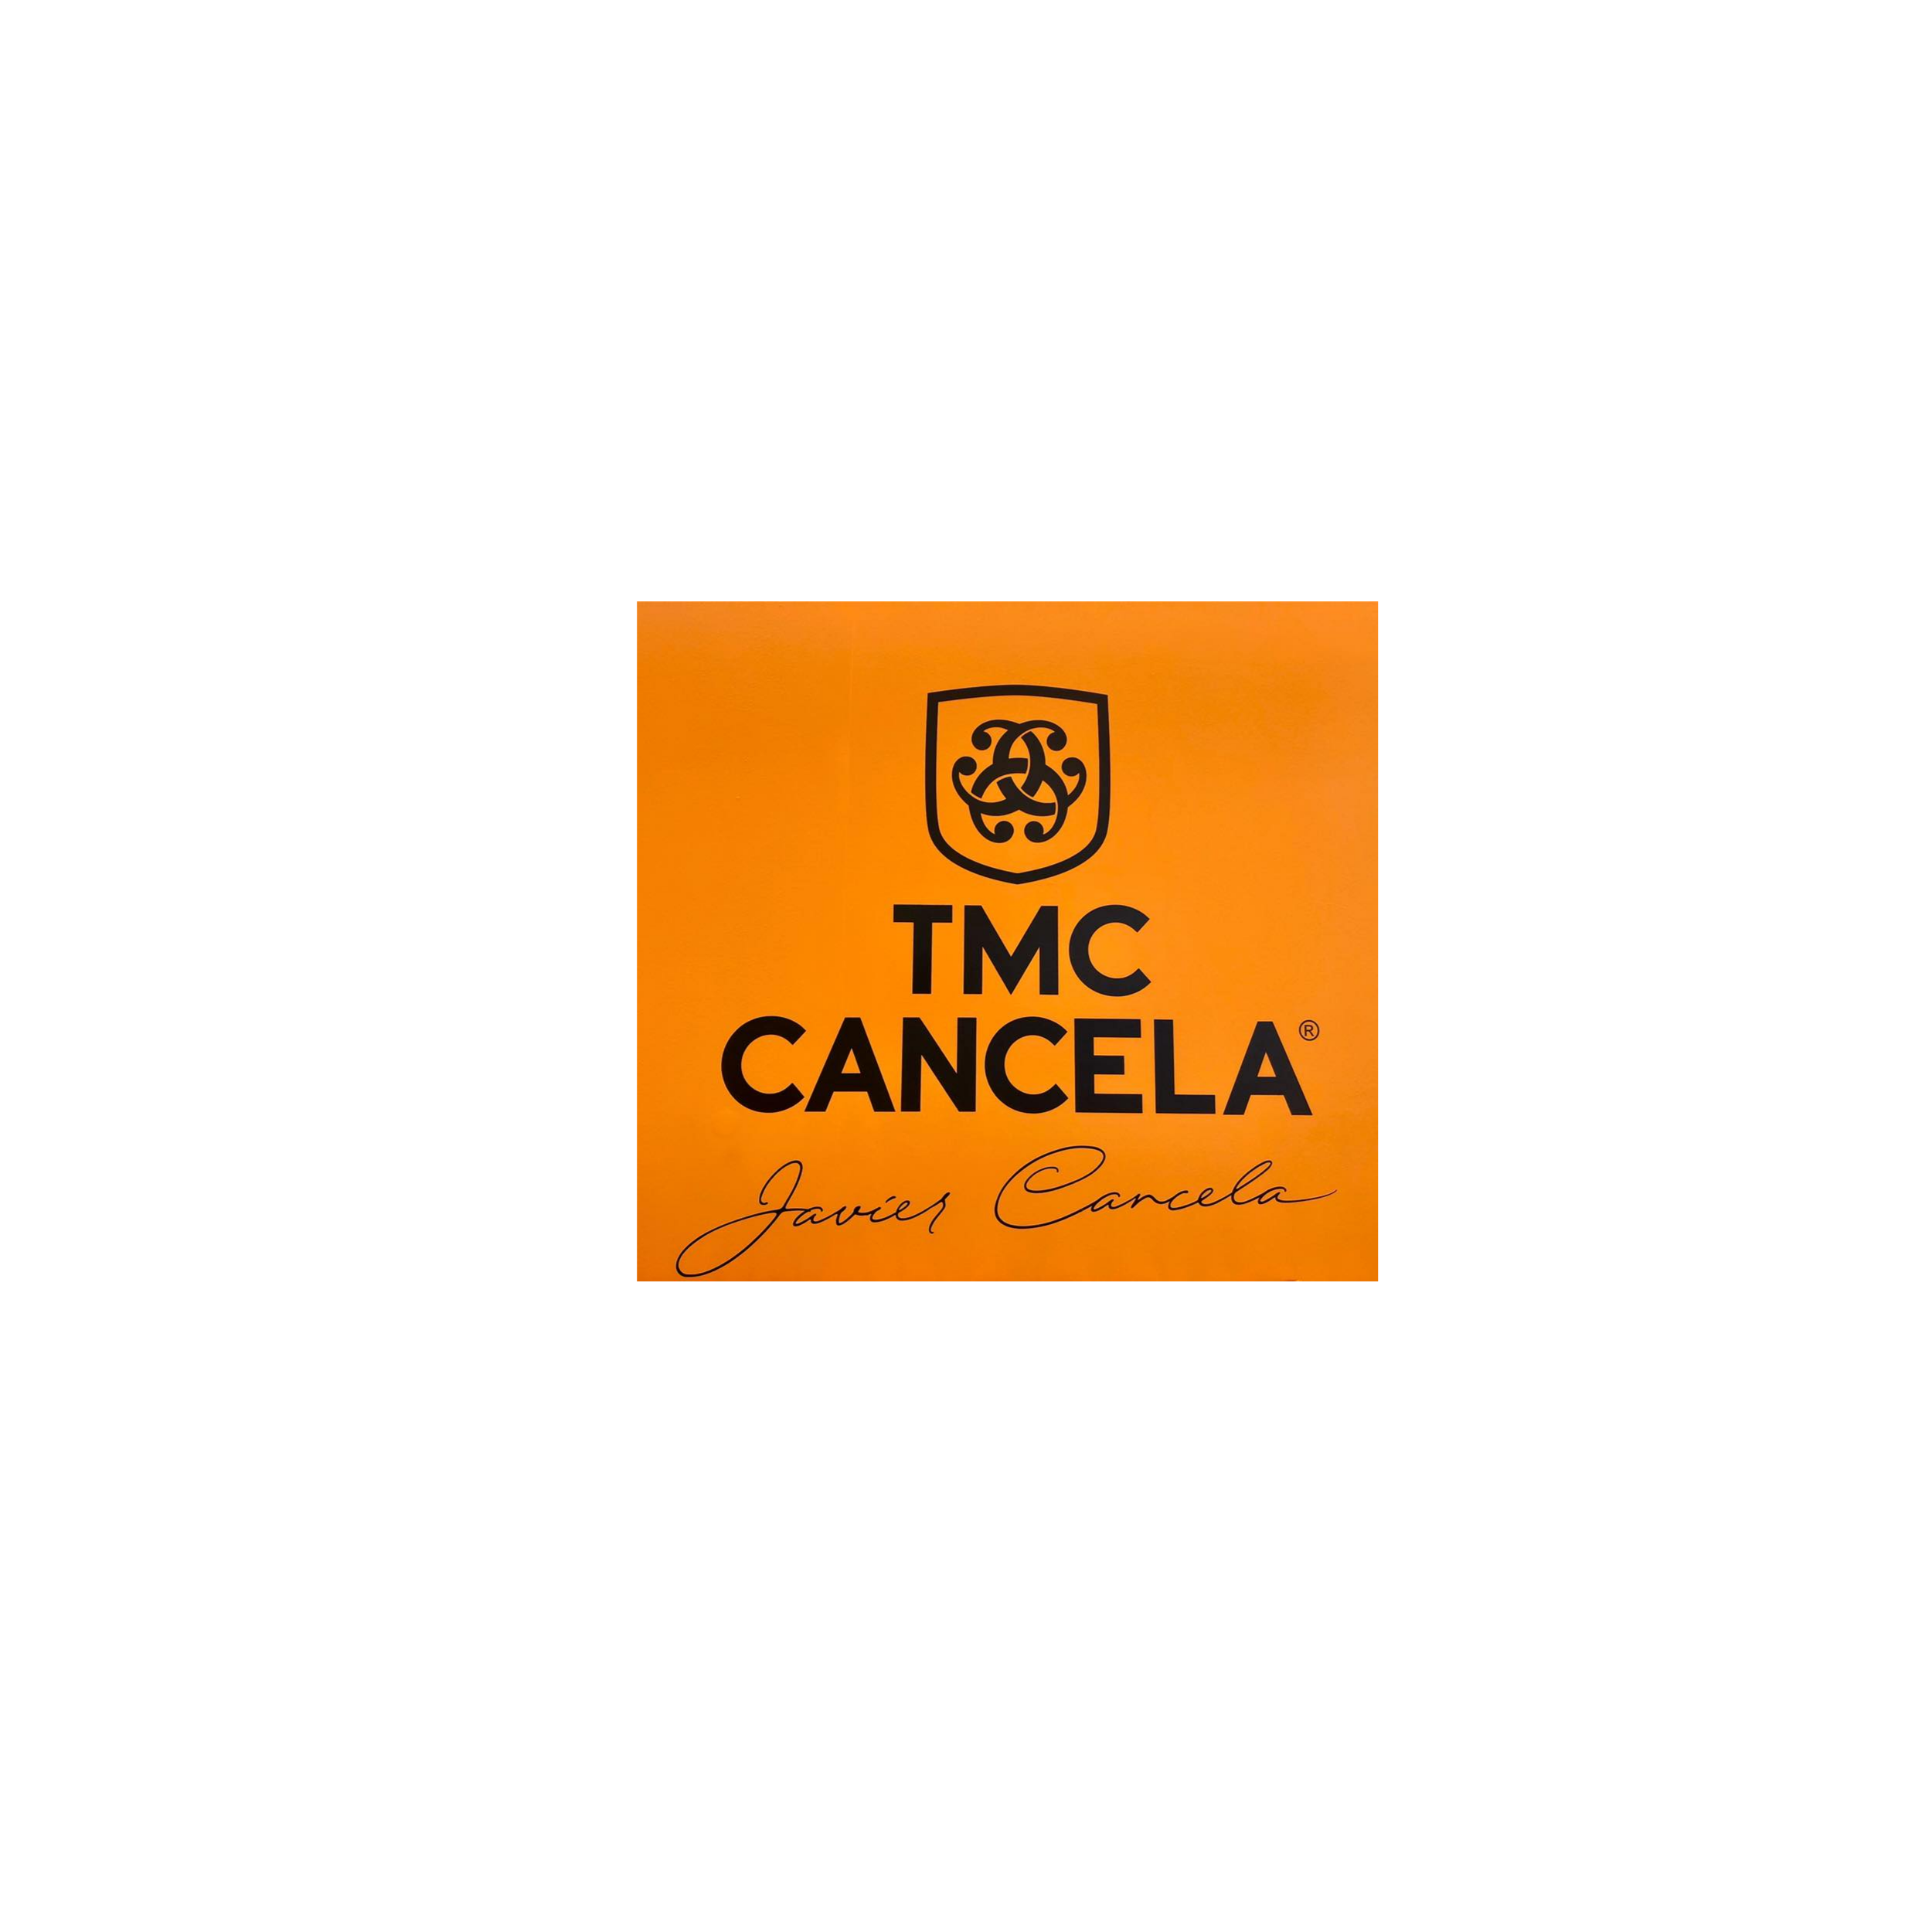 tmc_cancela-01